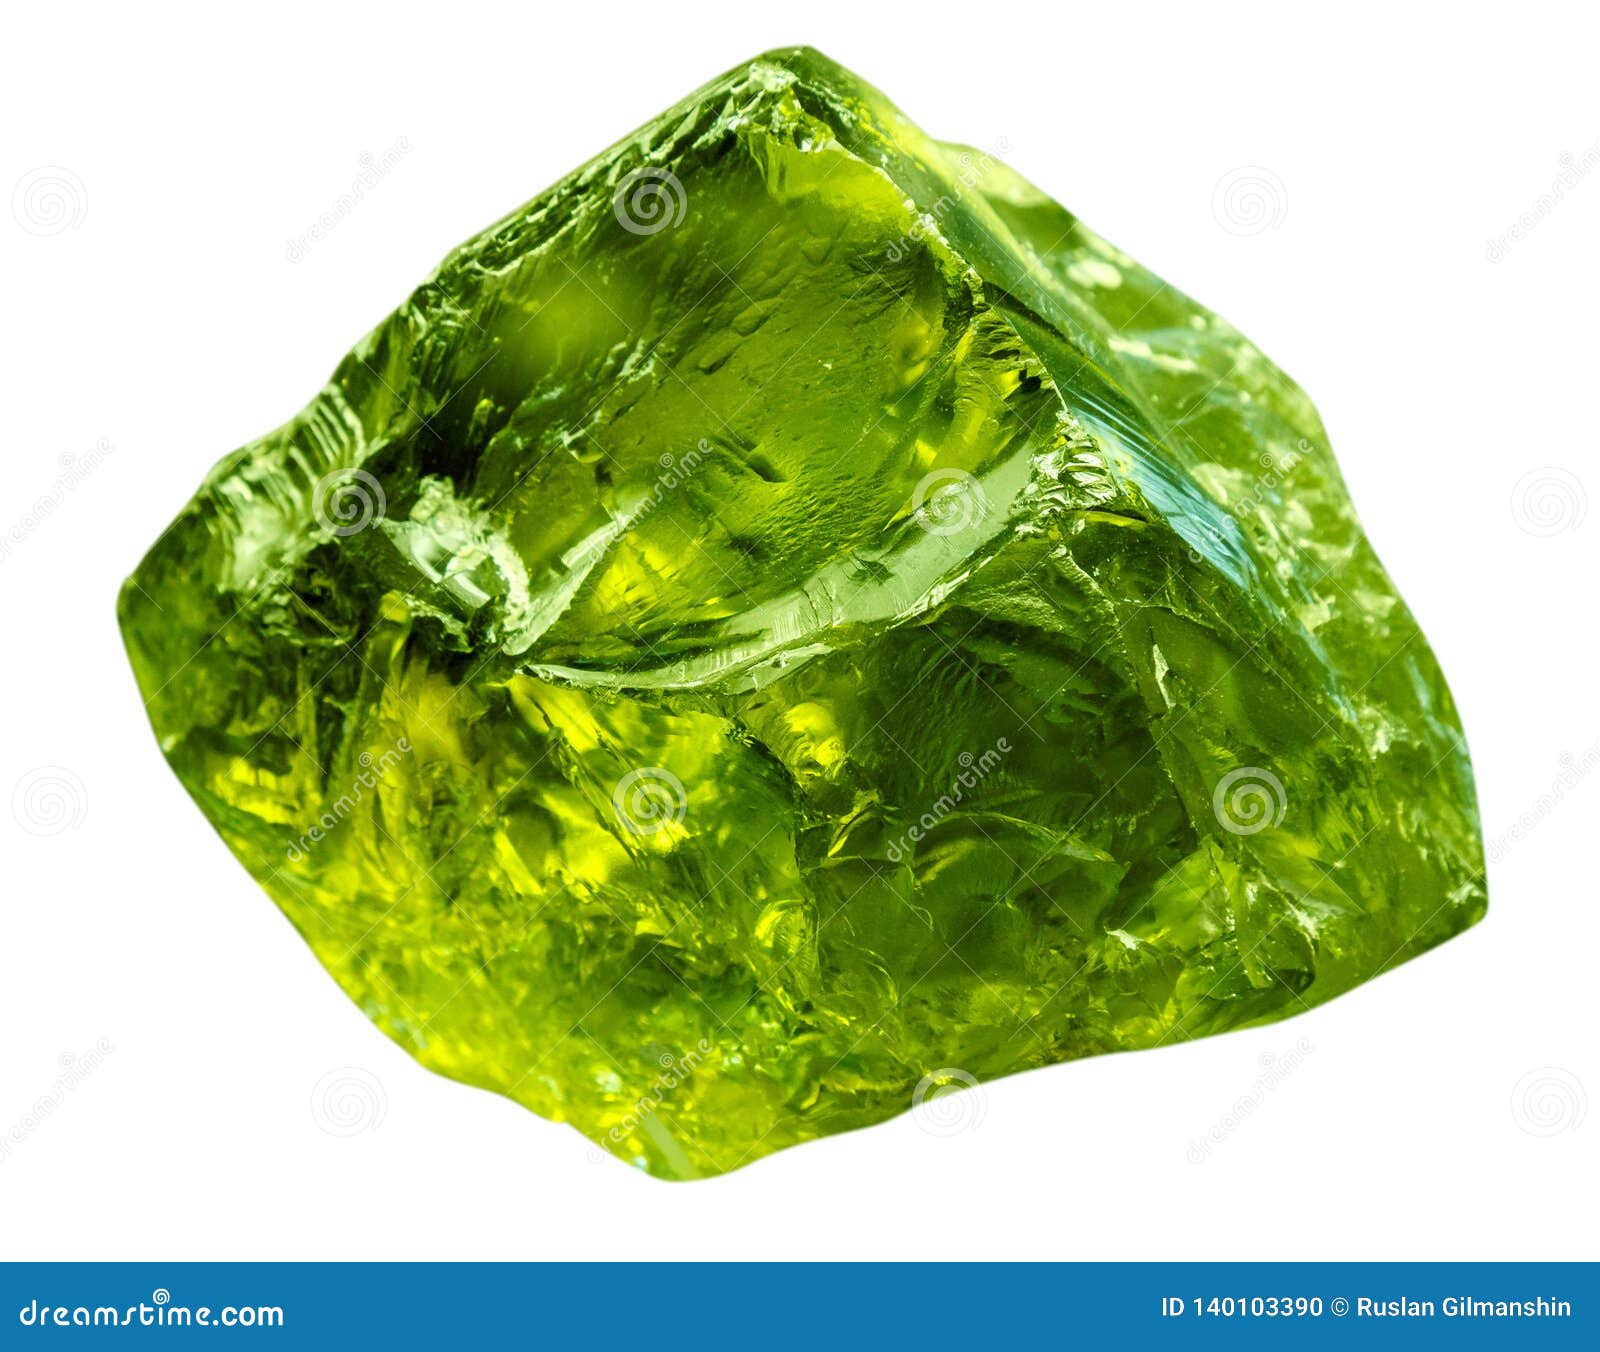 emerald gem stone mineral. green gemstone of precious rock  on white background. transparent shiny raw brilliant